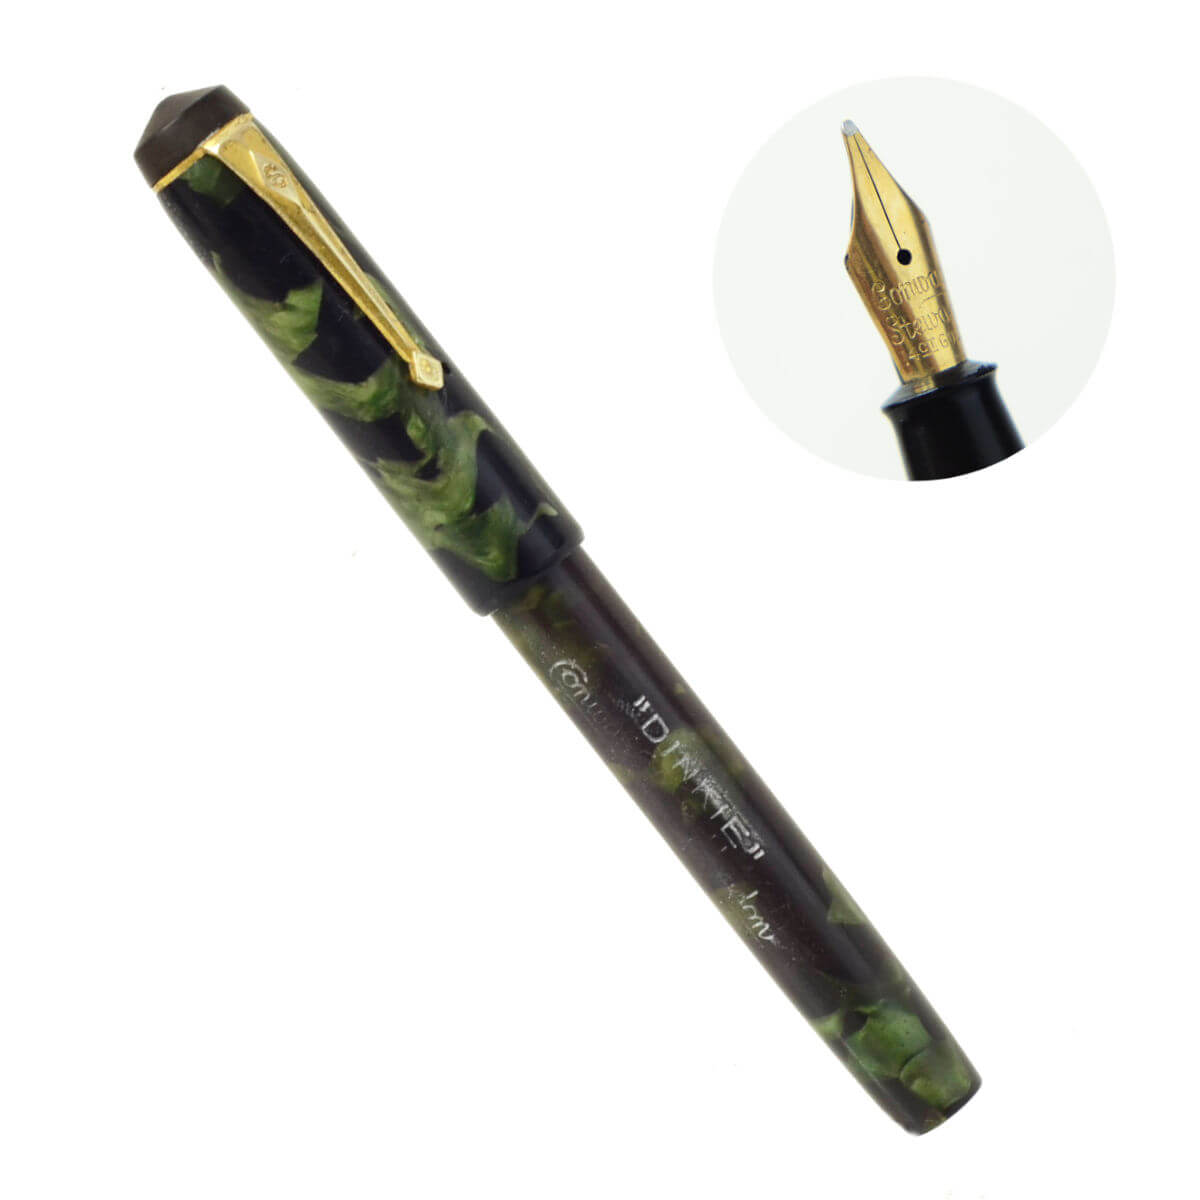 Vintage conway stewart dinkie 526 mini lever filler fountain pen – 14K gold flex B nib – Used